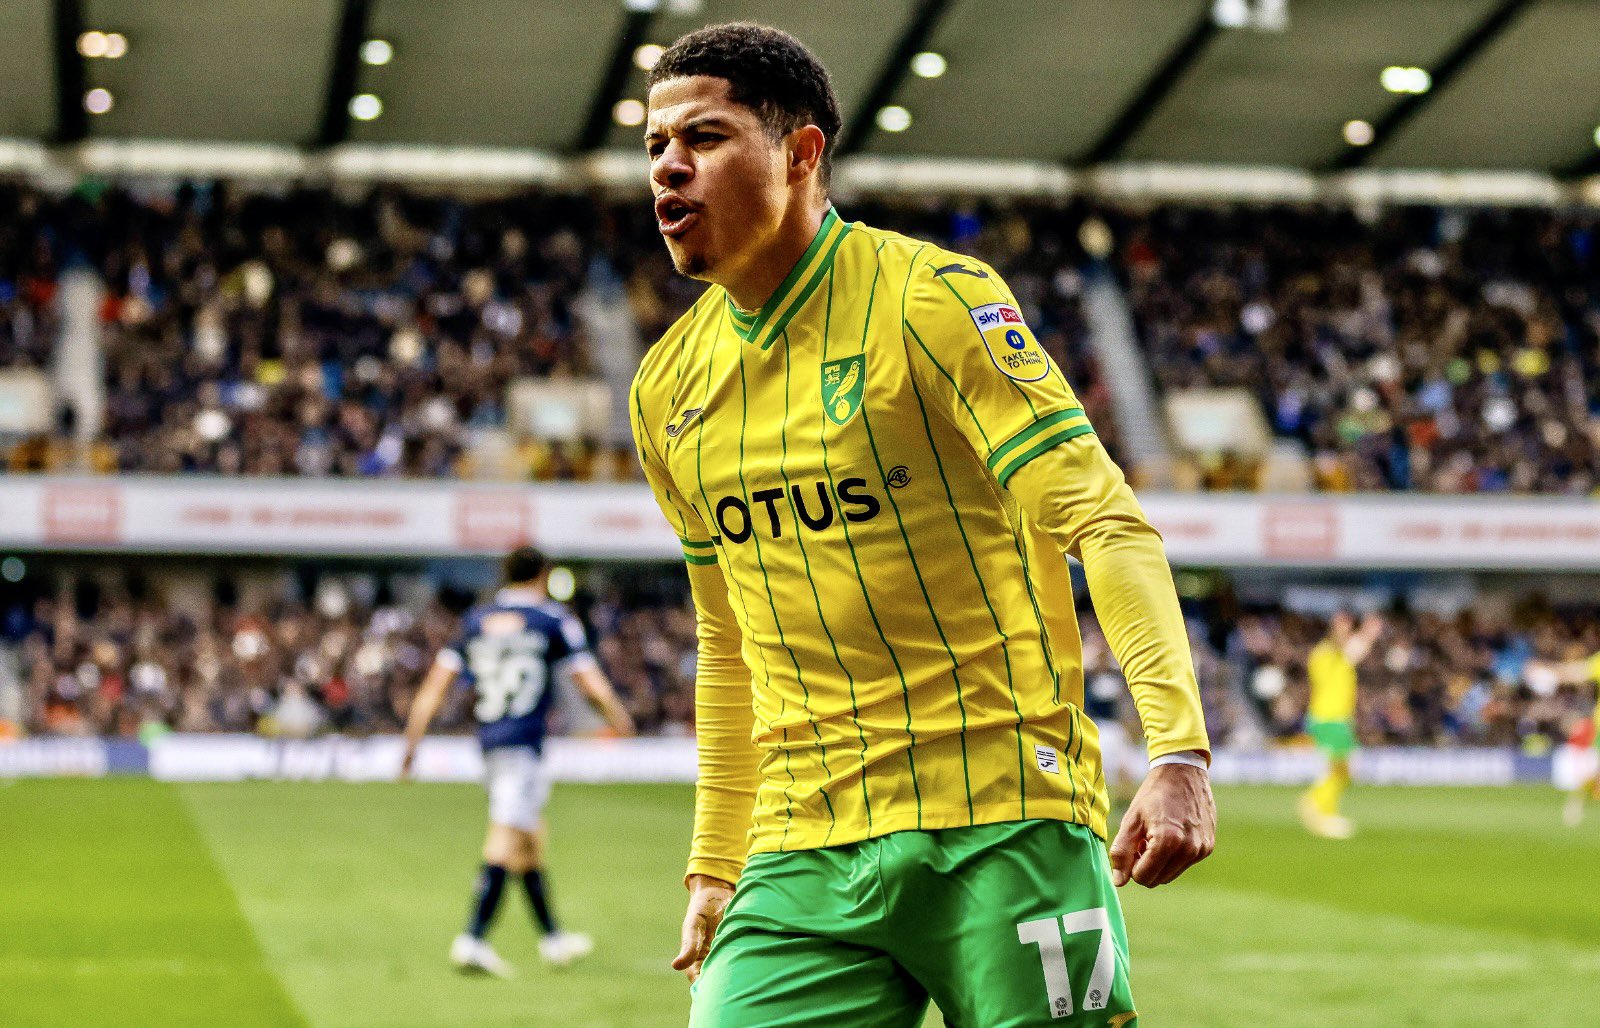 Sofascore Brazil on X: #Championship 🏴󠁧󠁢󠁥󠁮󠁧󠁿 Gabriel Sara teve a  maior Nota Sofascore do time em Norwich 2-3 Leeds! ⚽️ 1 gol 🅰️ 1  assistência 👟 5 chutes (2 no gol) 🔑